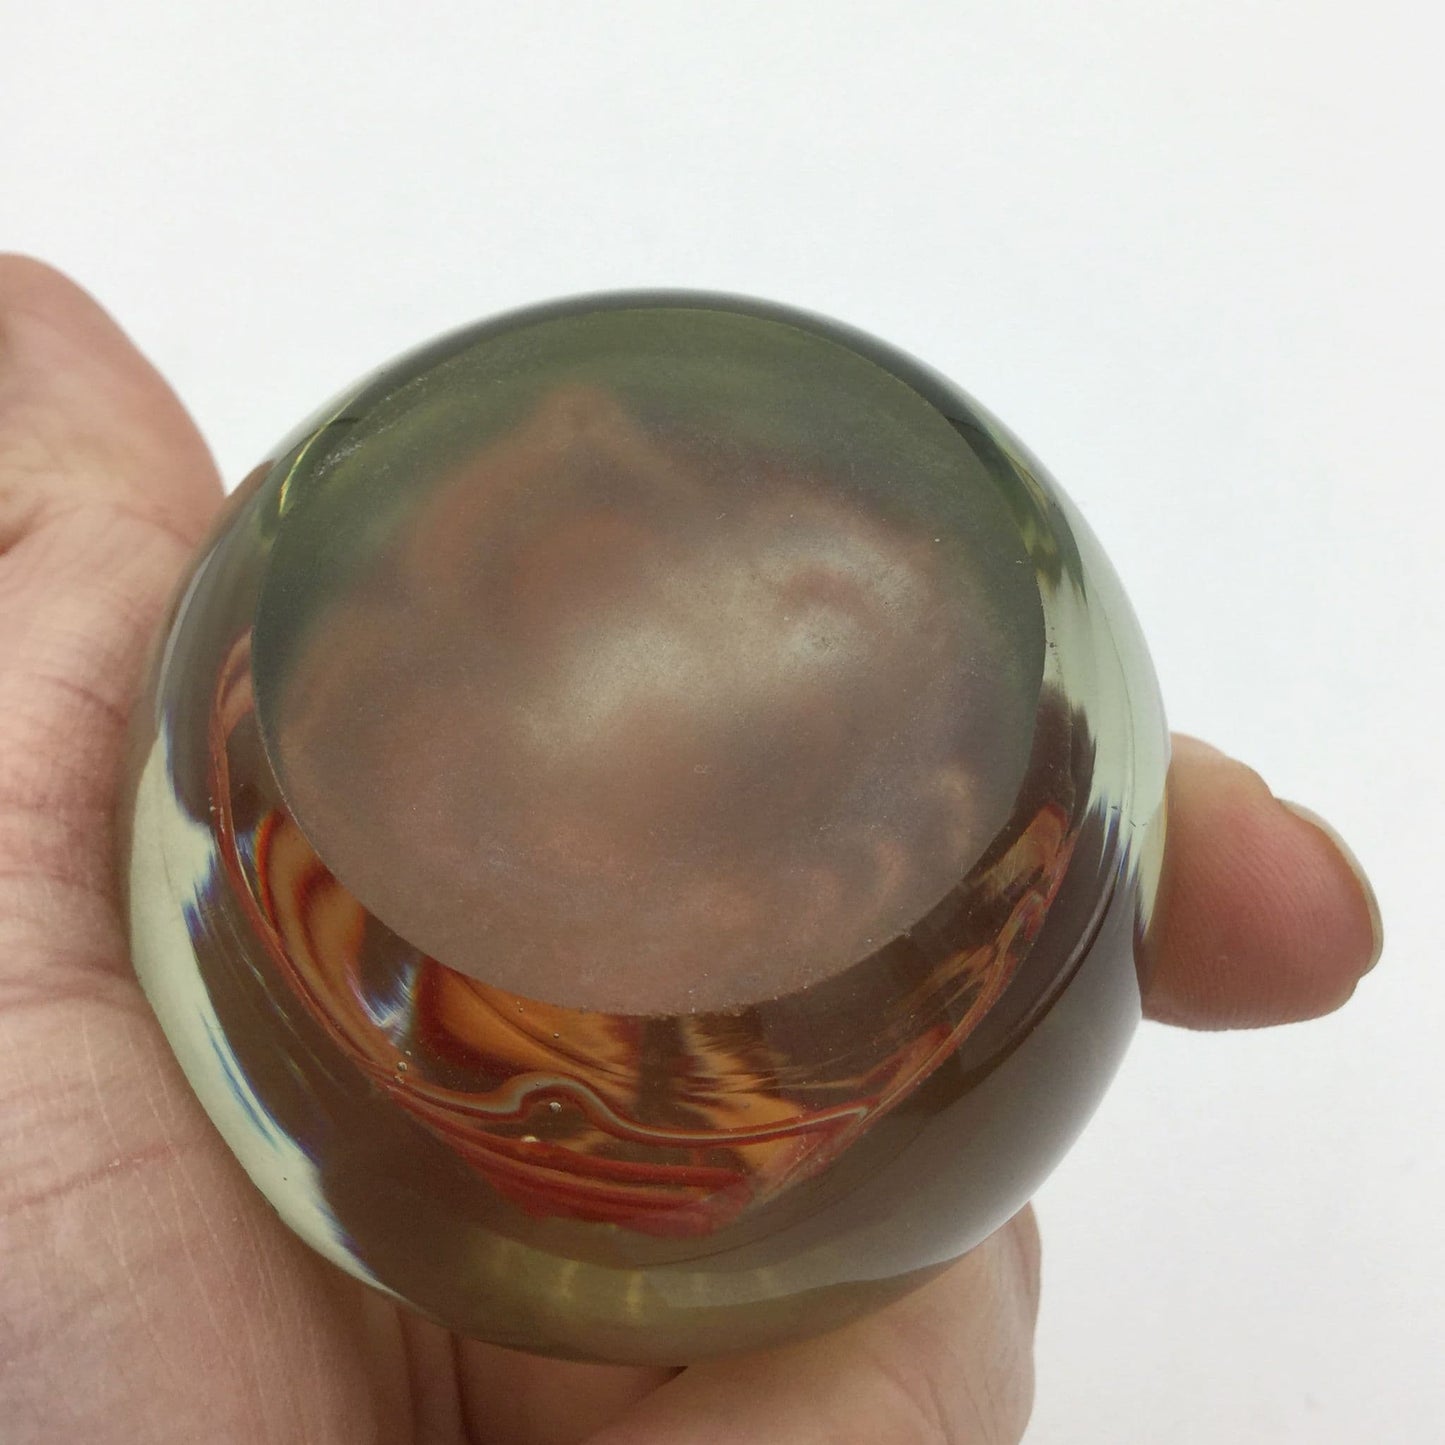 Small Orange Swirl Glass Paperweight